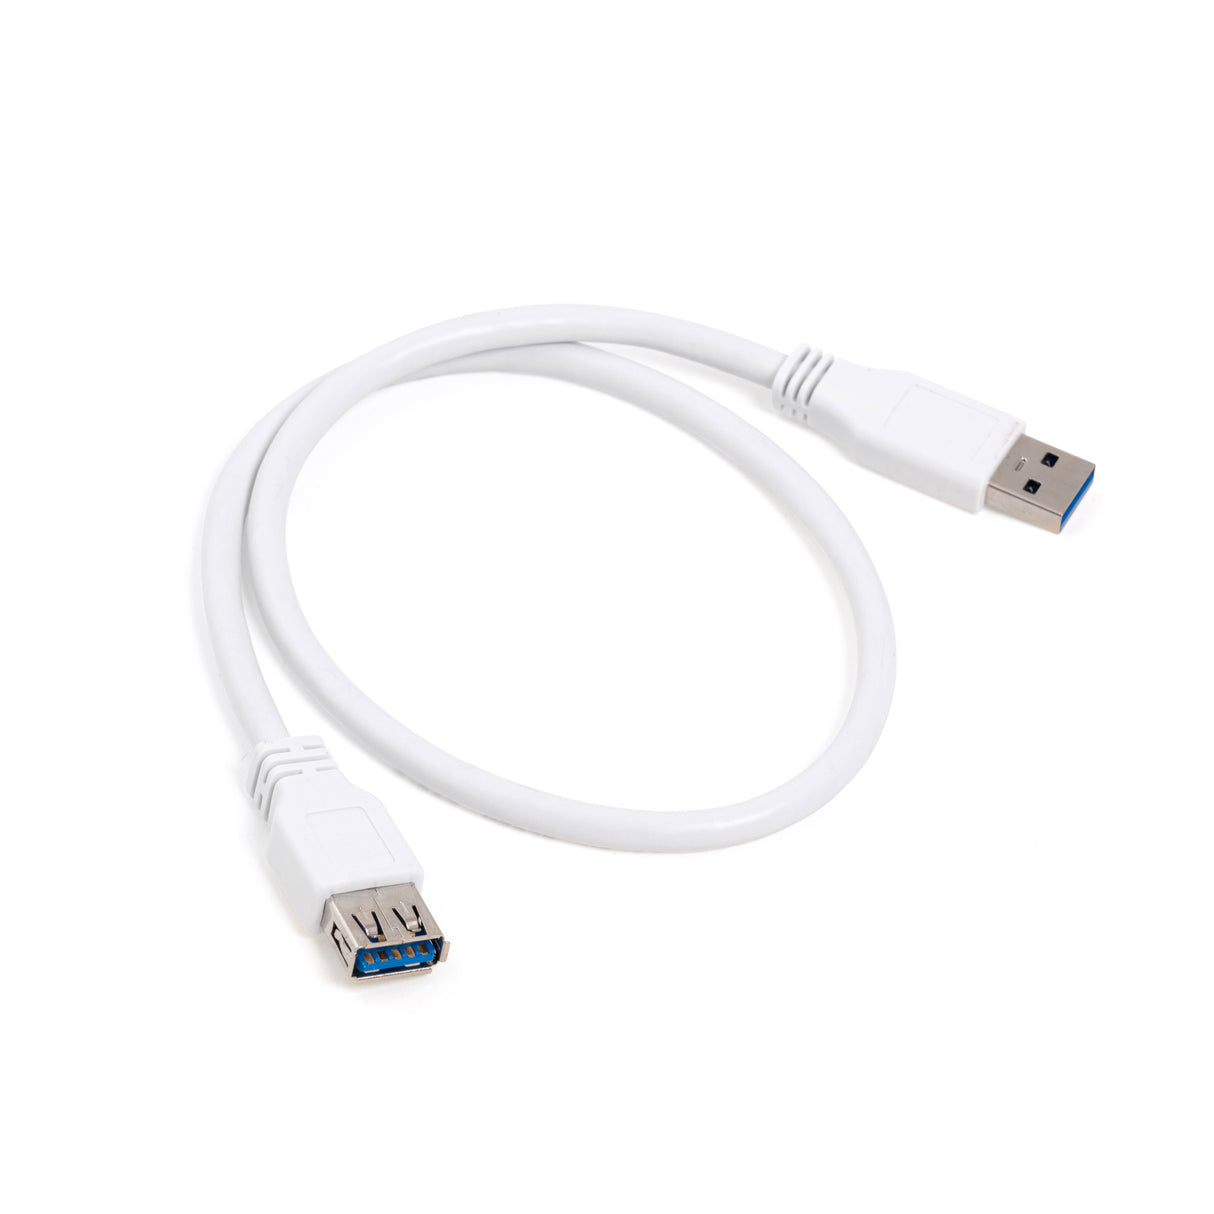 Cable USB 3.0 macho-hembra de 0,5 metros AV0481C